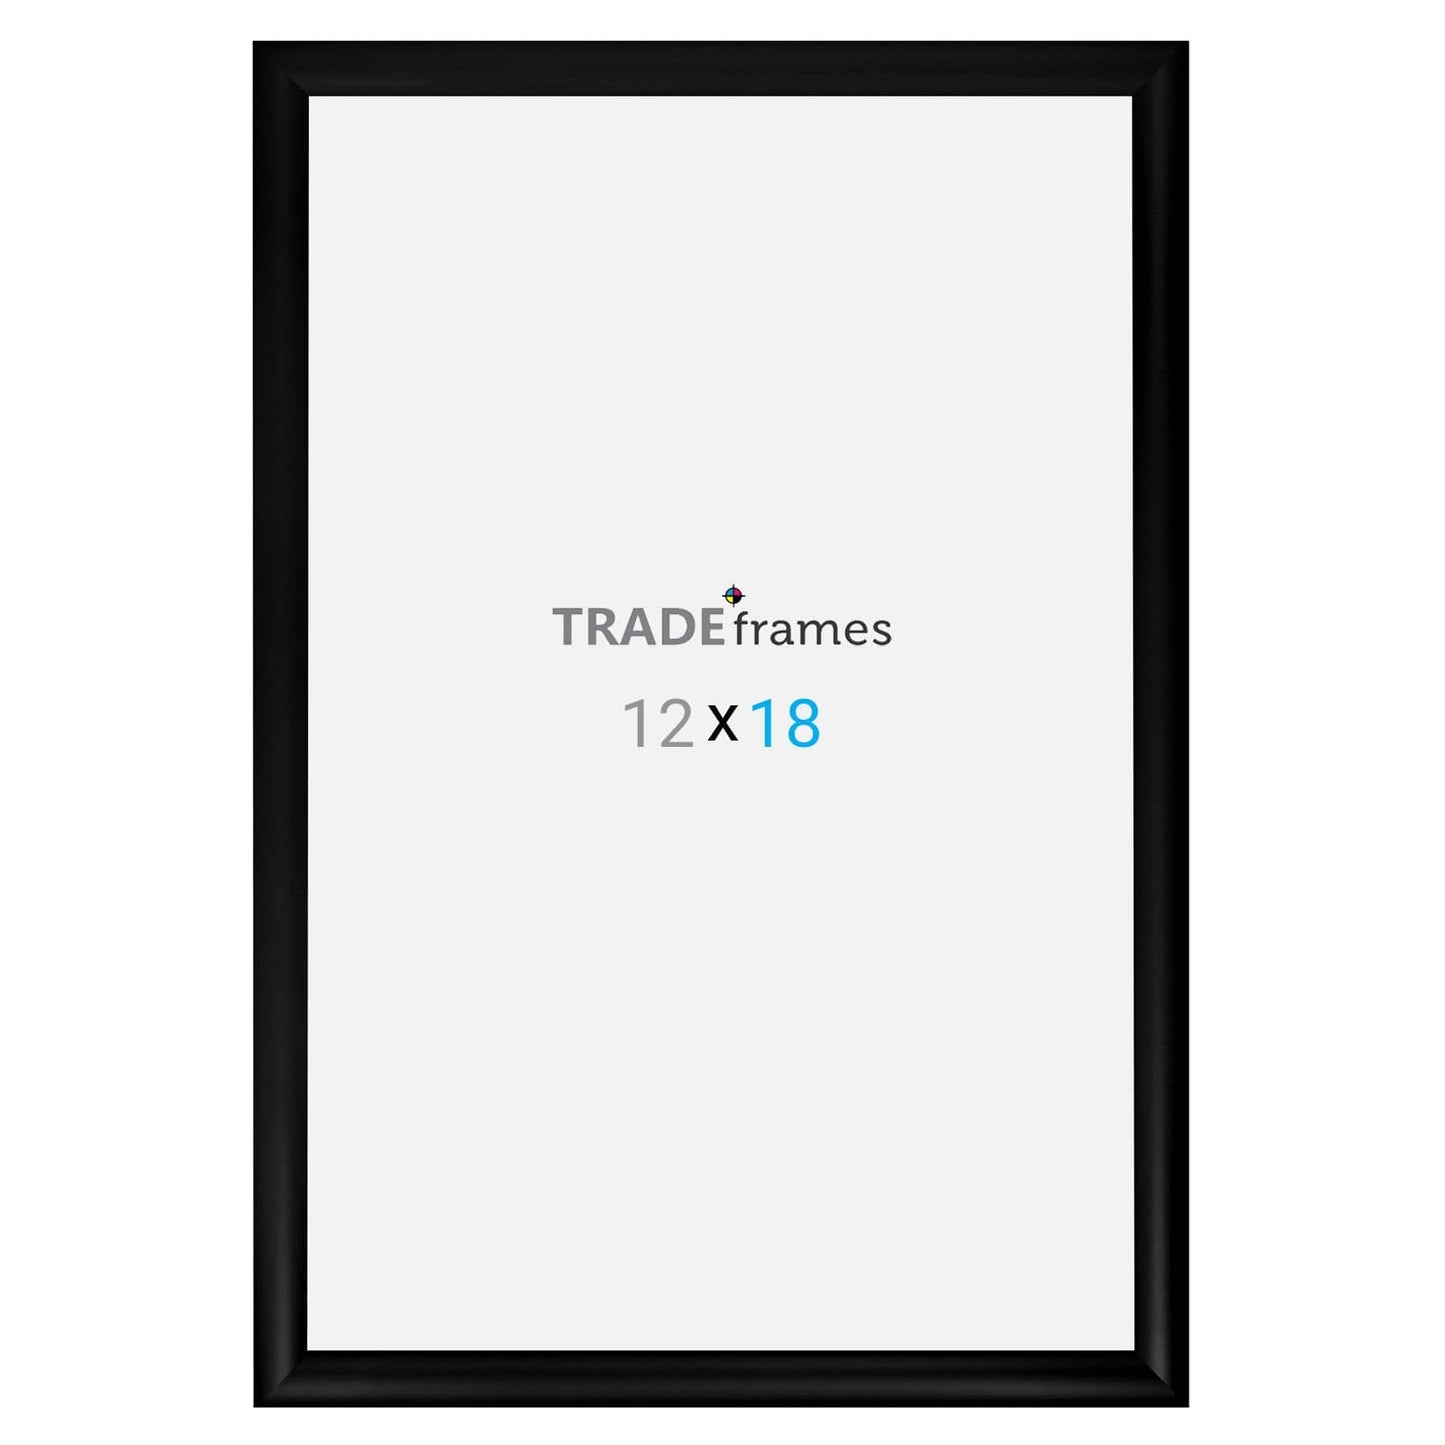 12x18 TRADEframe Black Snap Frame 12x18 - 1.2 inch profile - Snap Frames Direct